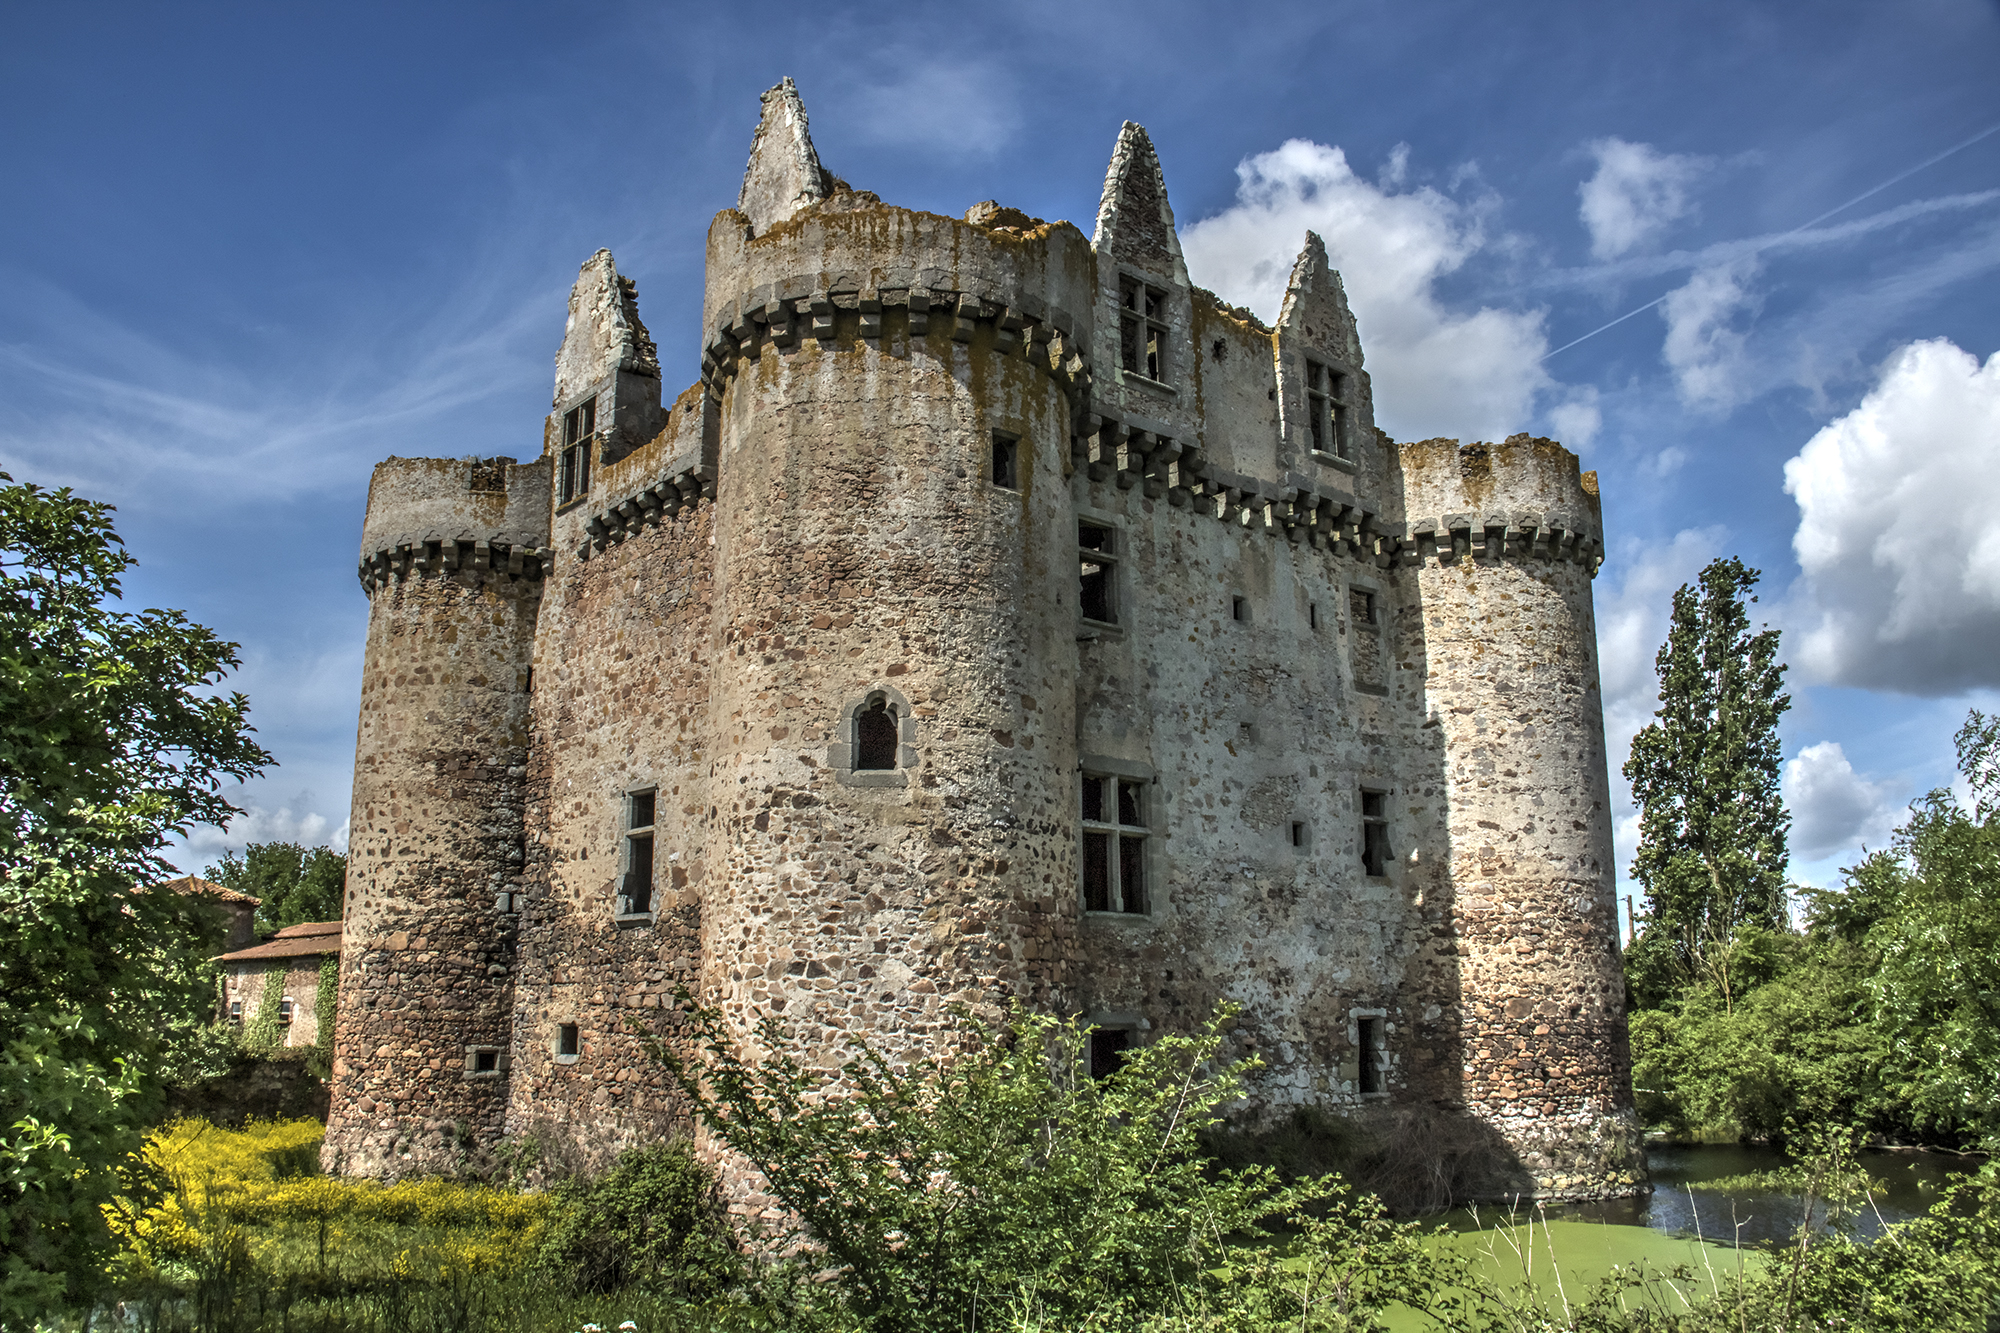 Средневековый замок во франции. Замок феодала Франция. Шато де Пьерфон Франция. Замок наджак Франция. Замок Киннелл Франция.